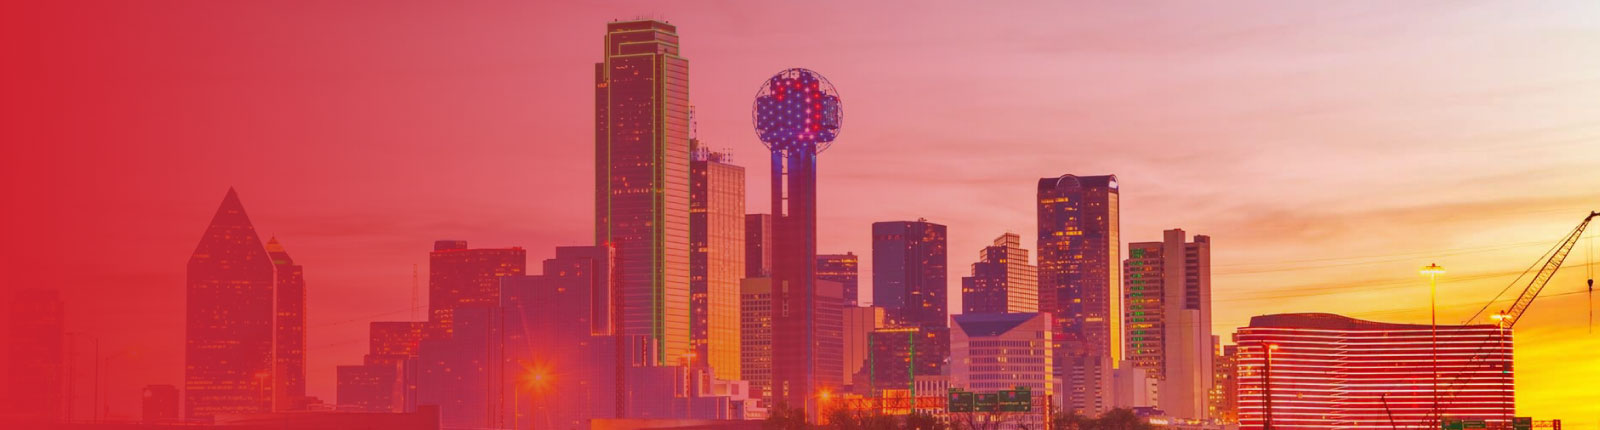 RevLocal Dallas skyline 